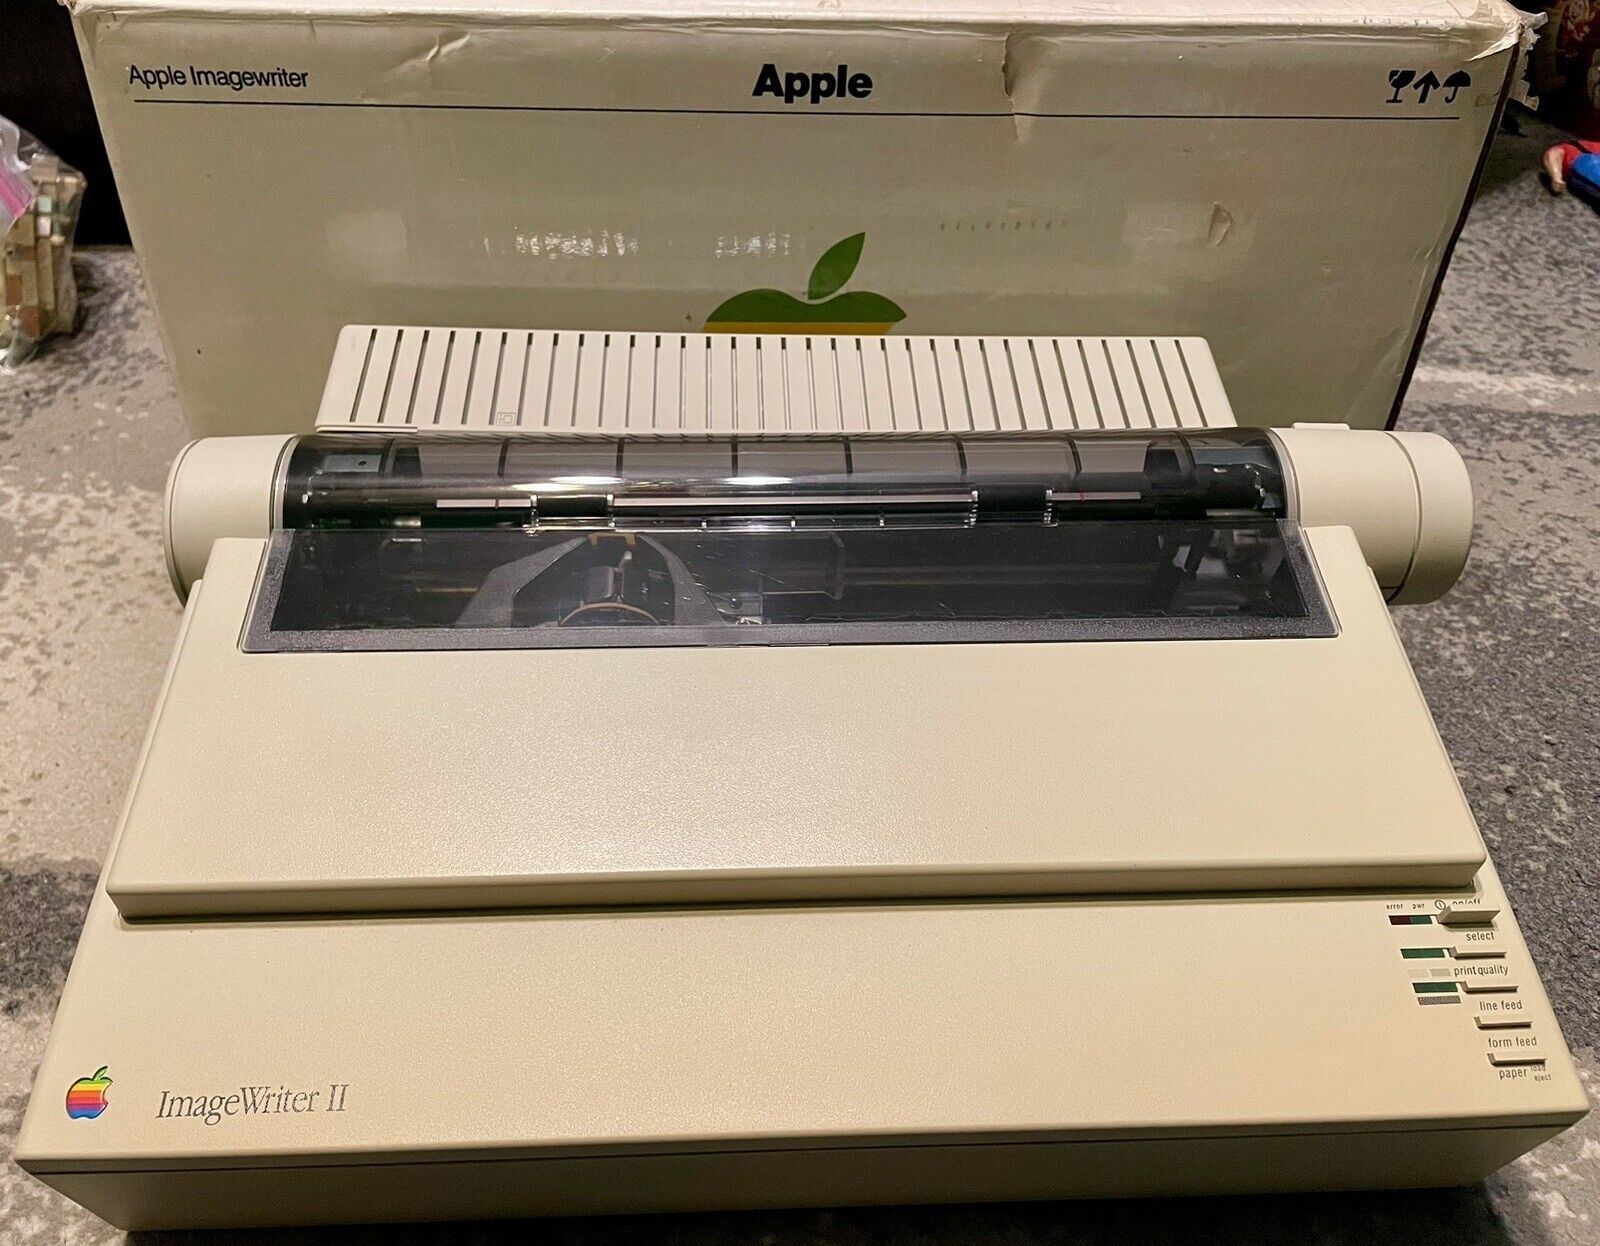 Vintage Apple ImageWriter II Printer With Original Box G0010 POWERS ON Computer